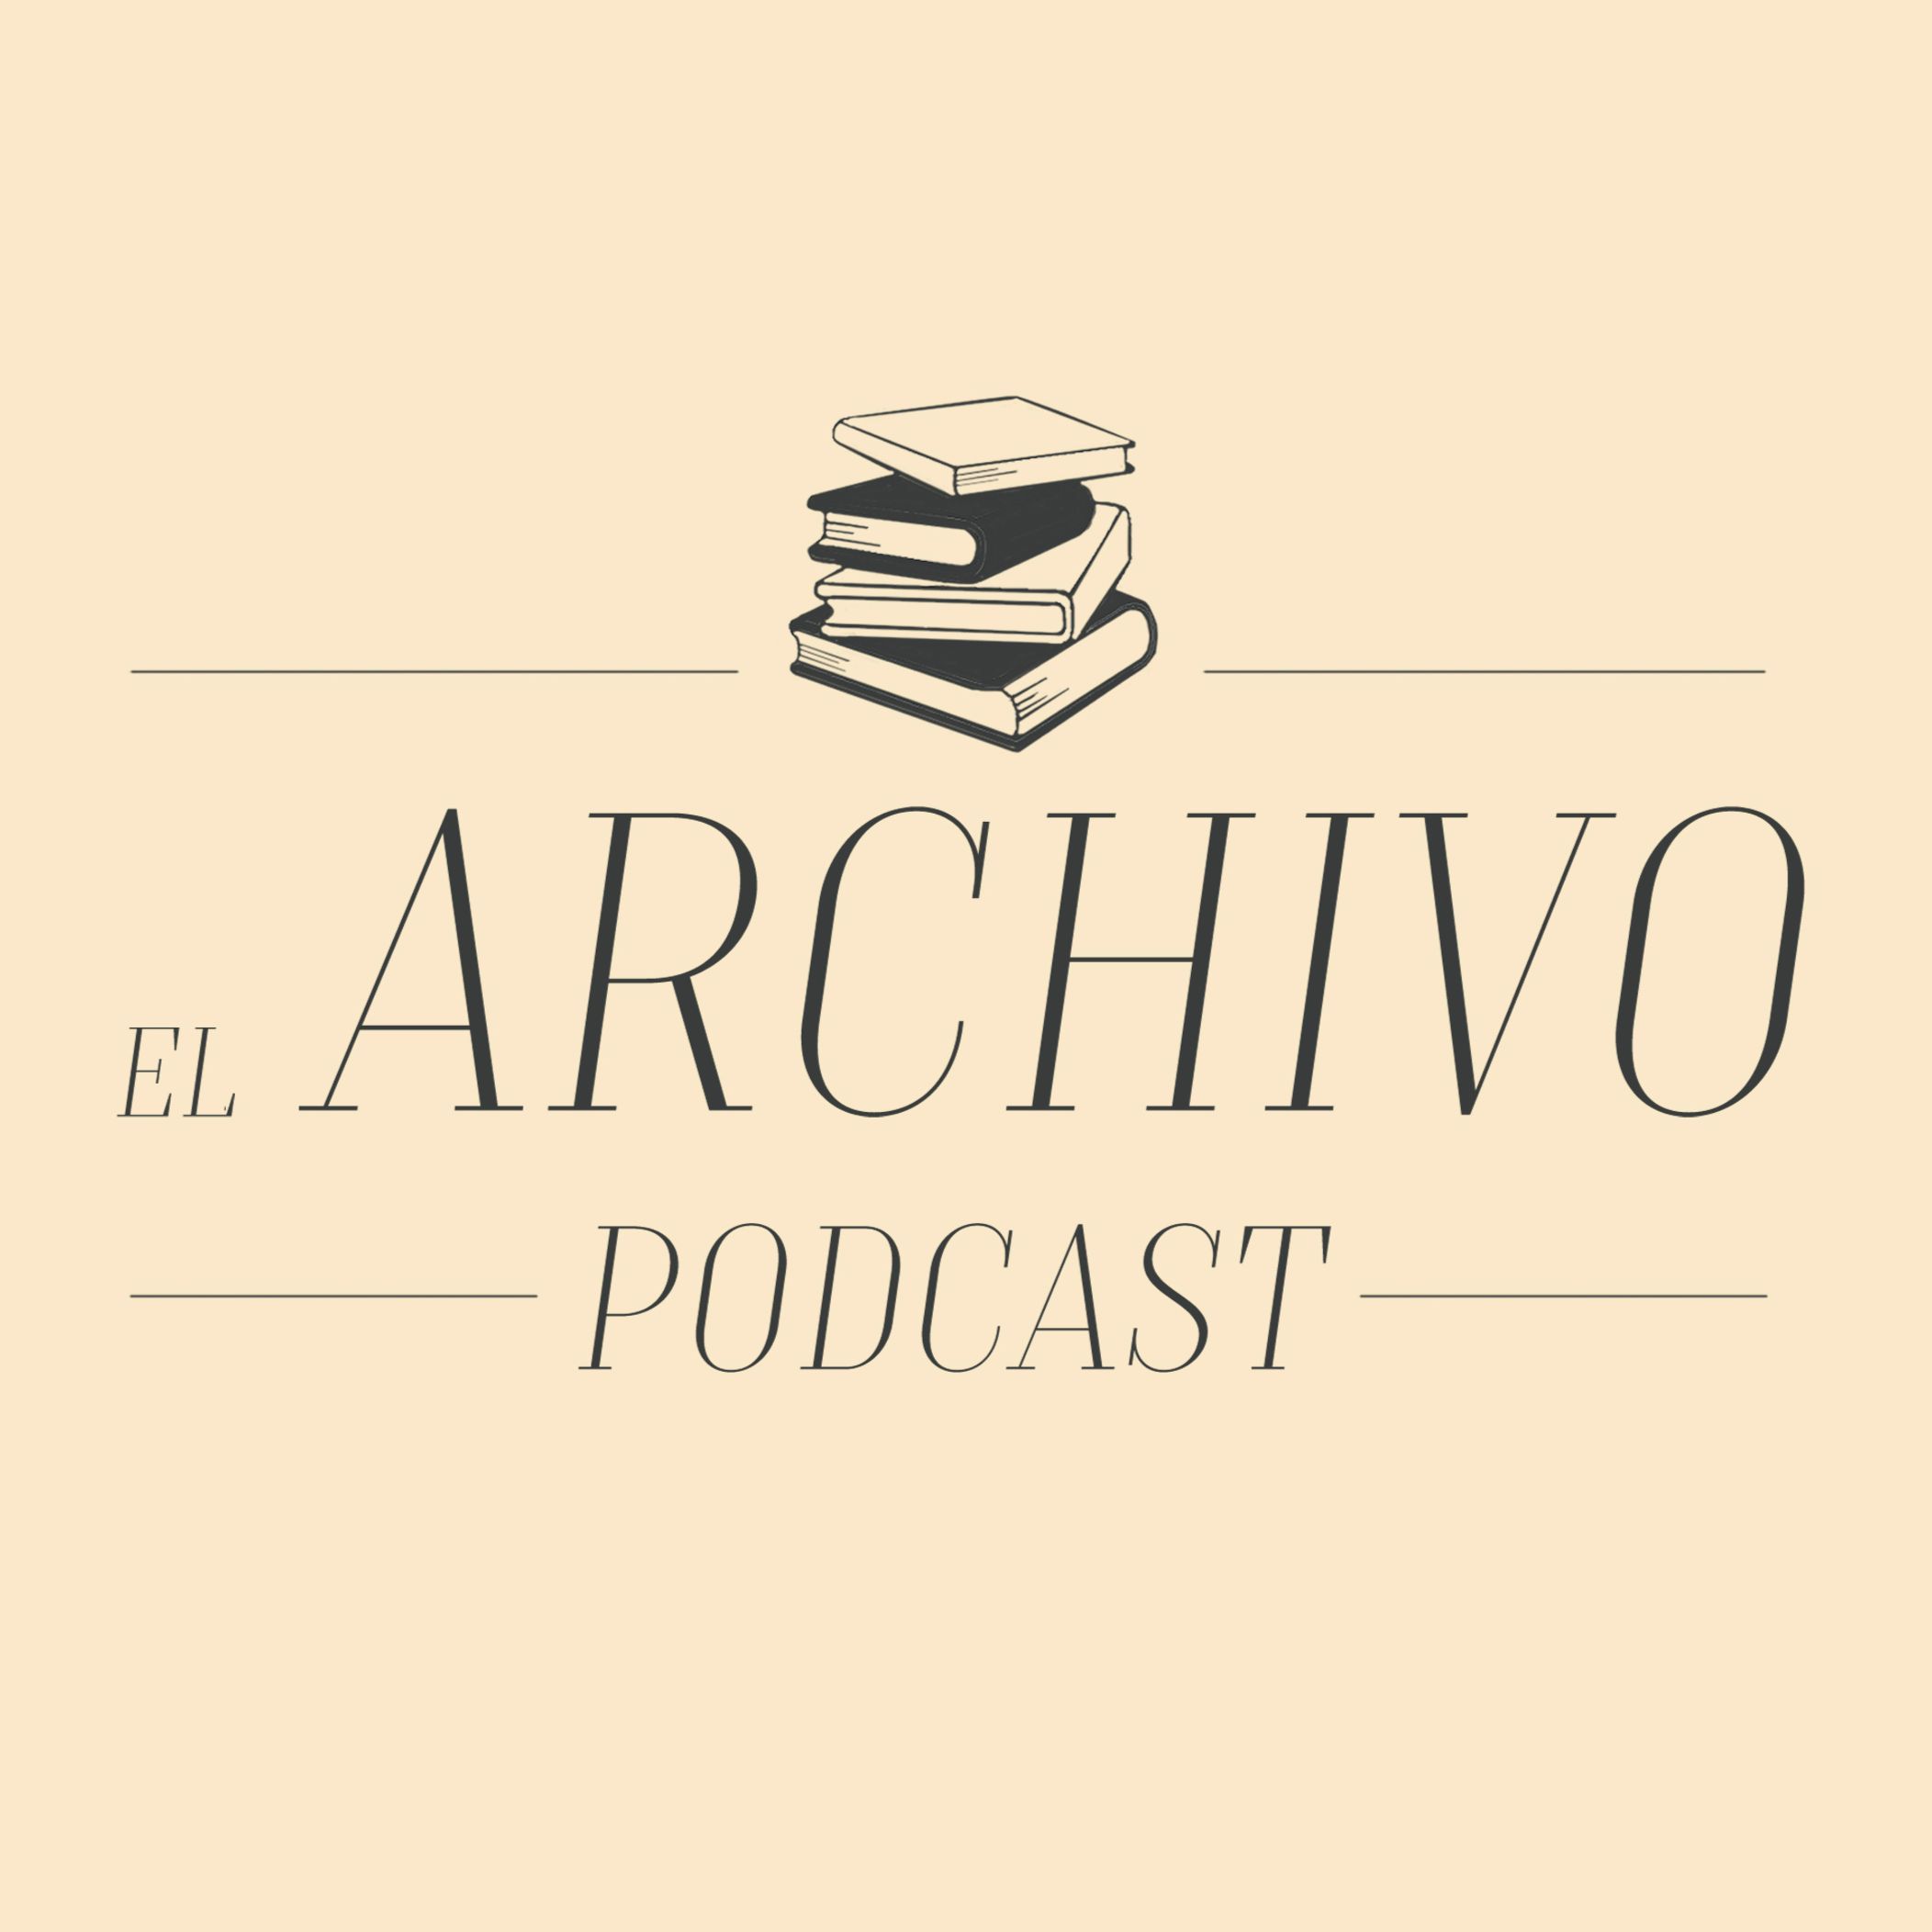 El Archivo Podcast